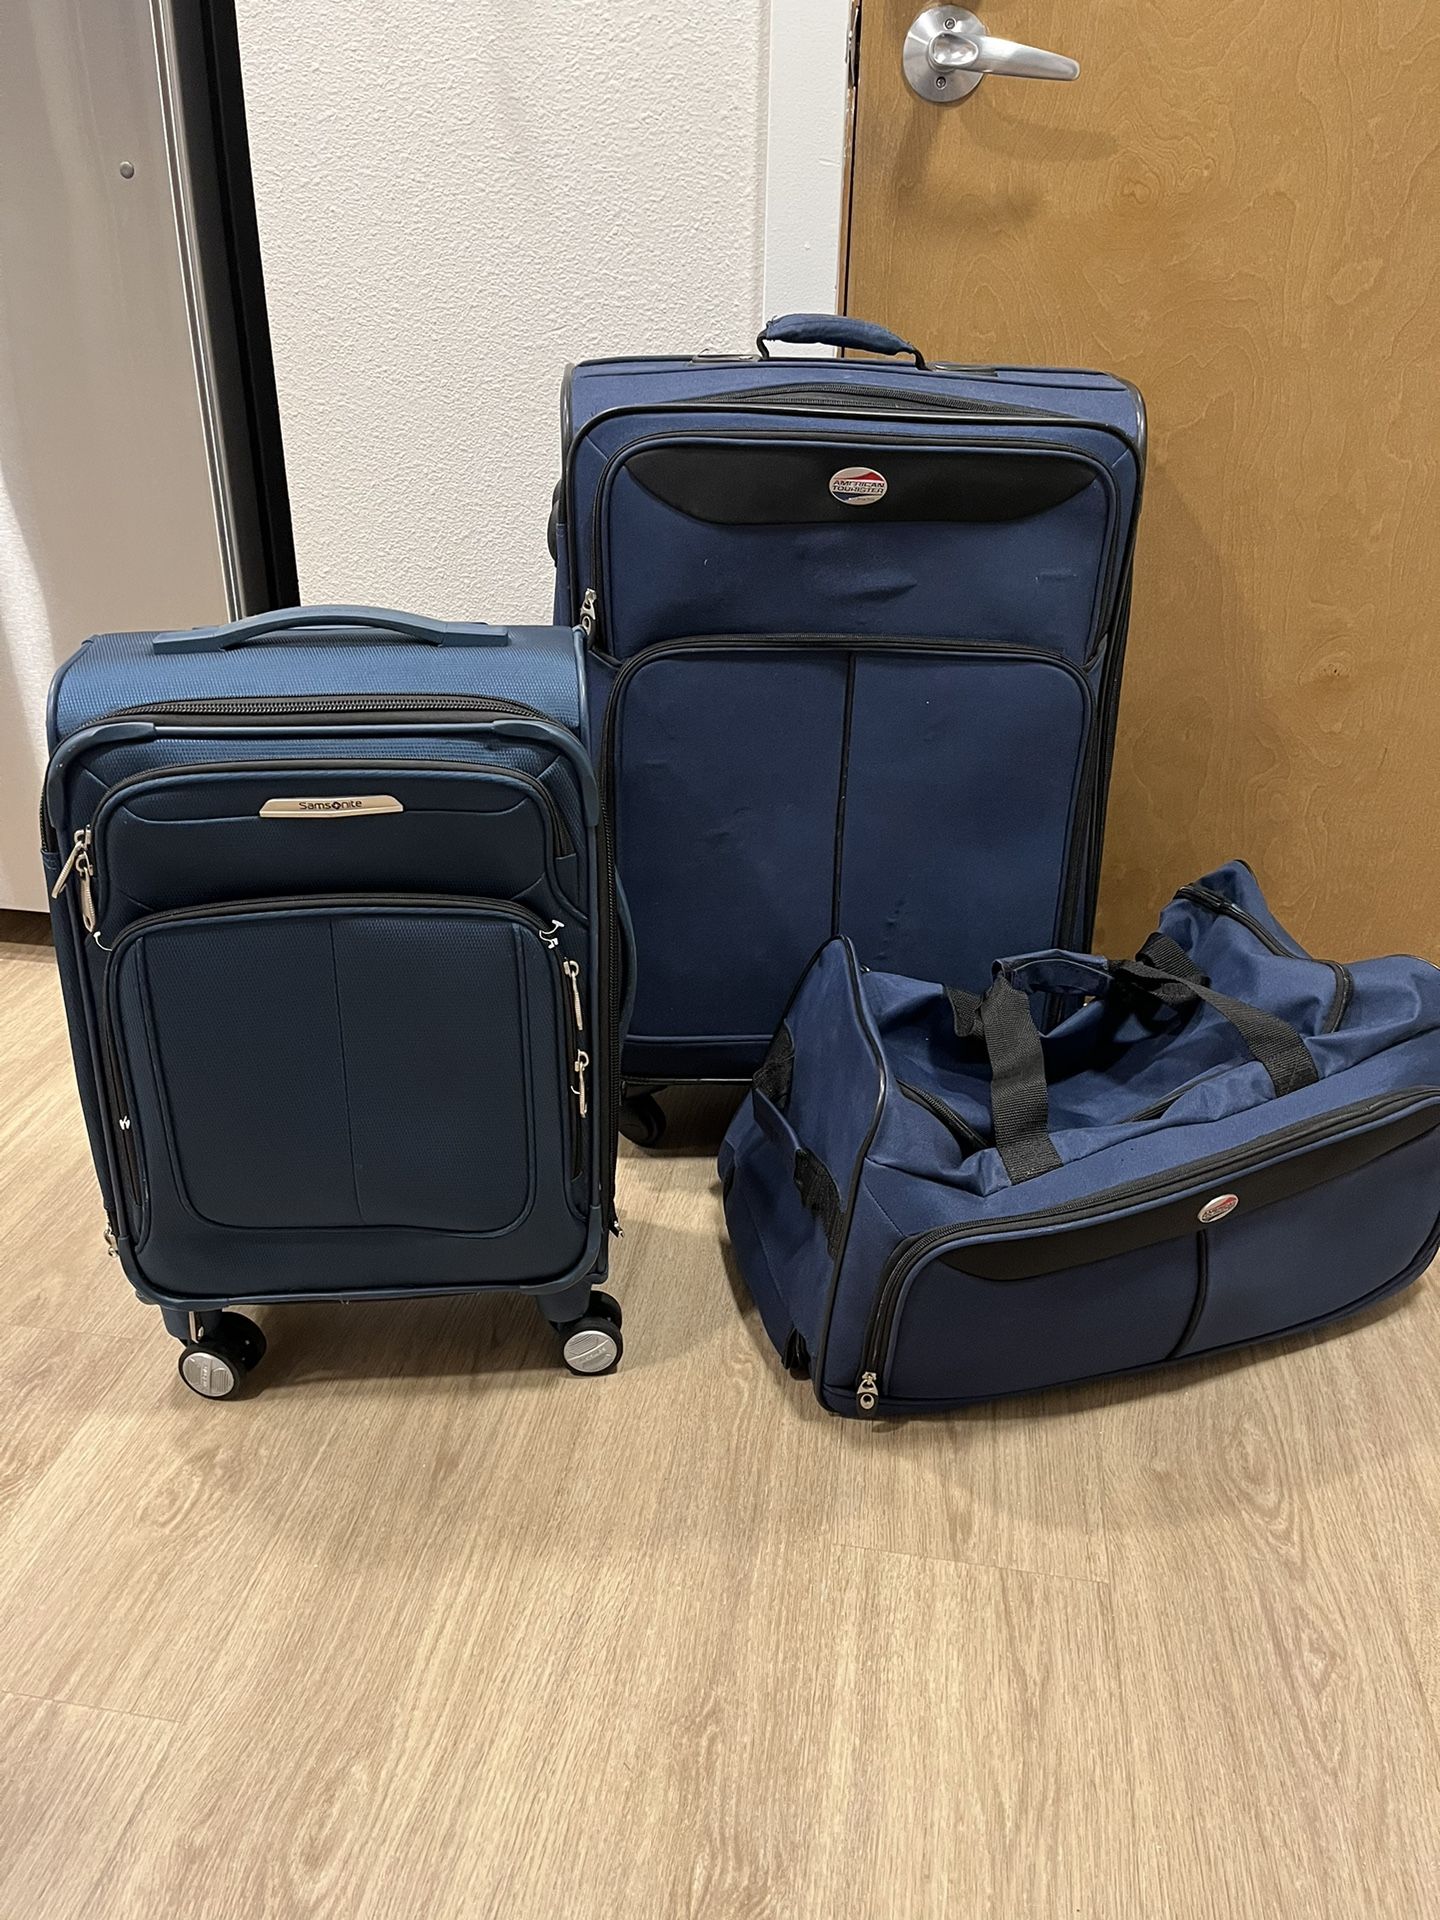 Luggage - set of 3 (2 American Tourister + 1 Samsonsite)